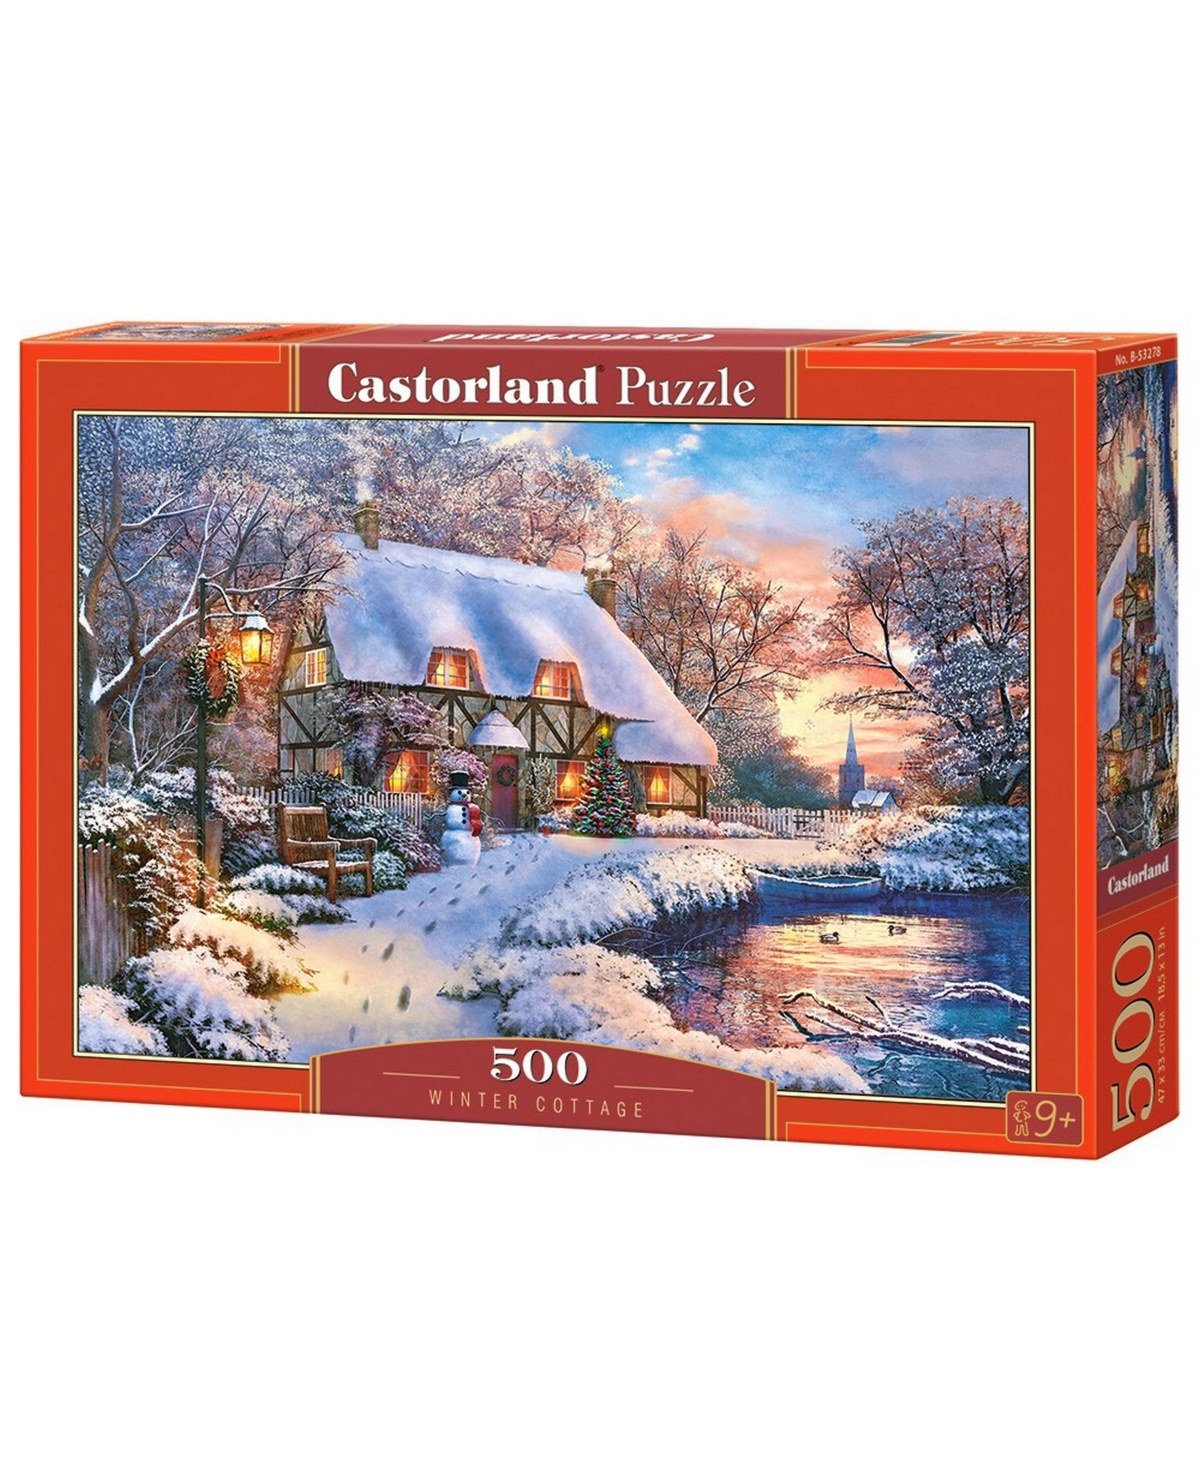 Castorland Winter Cottage Jigsaw Puzzle Set, 500 Piece In Multicolor